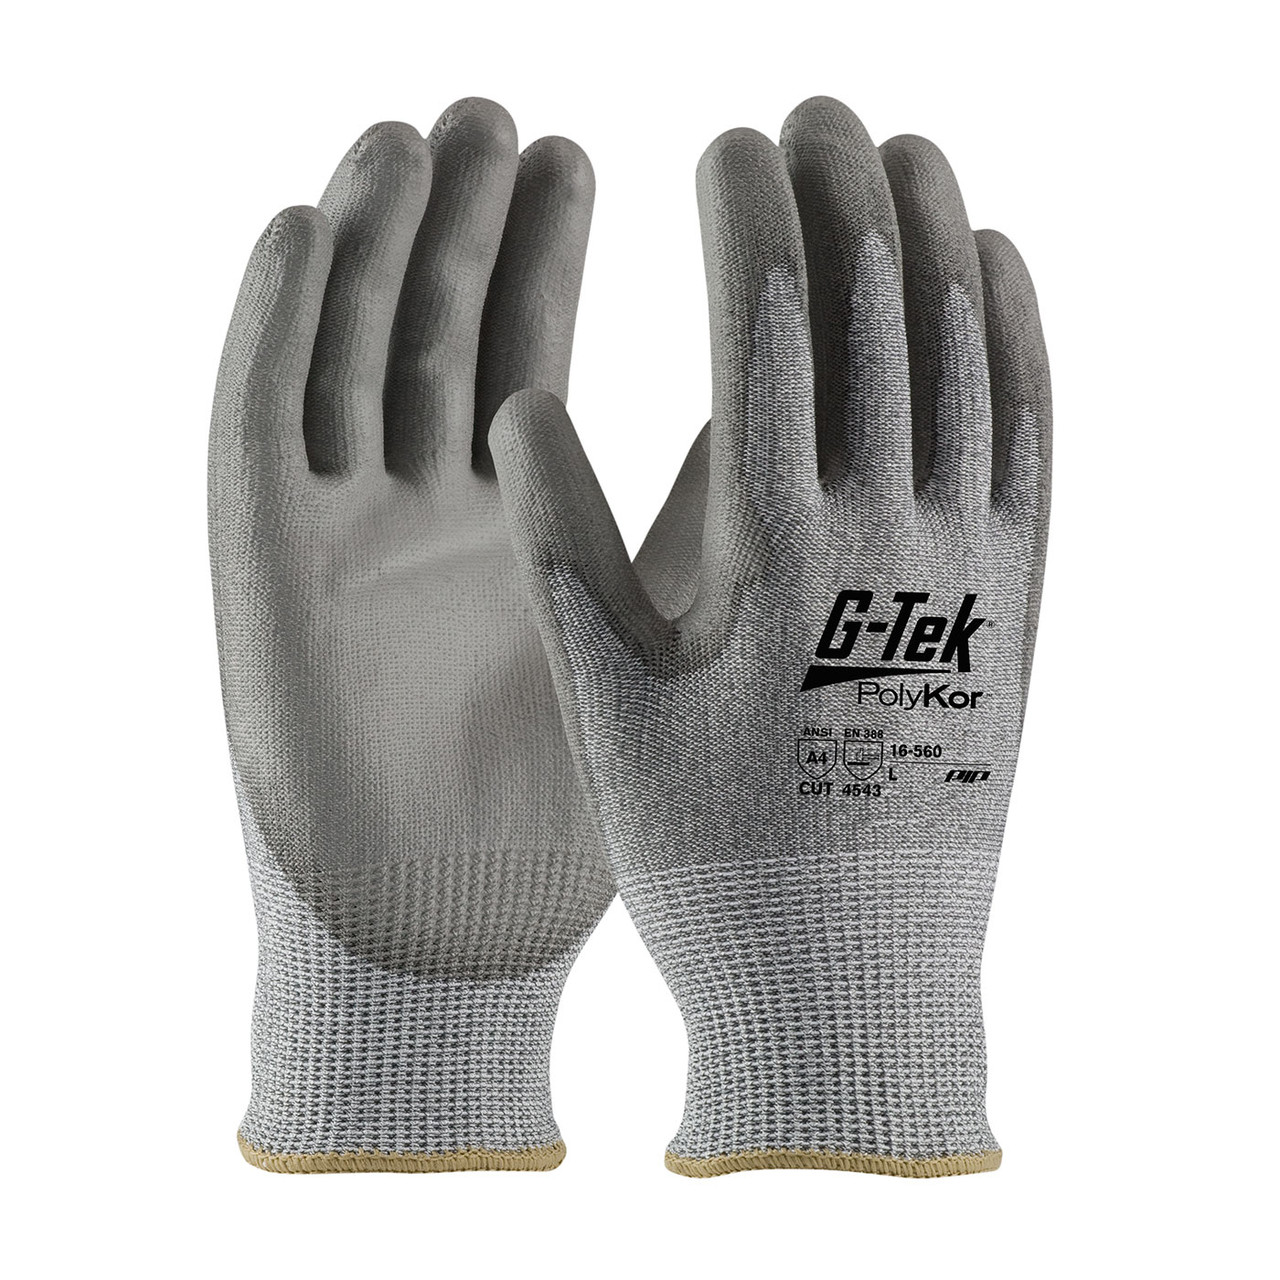 PIP G-Tek PolyKor Cut-Resistant Gloves, Polyurethane Grip